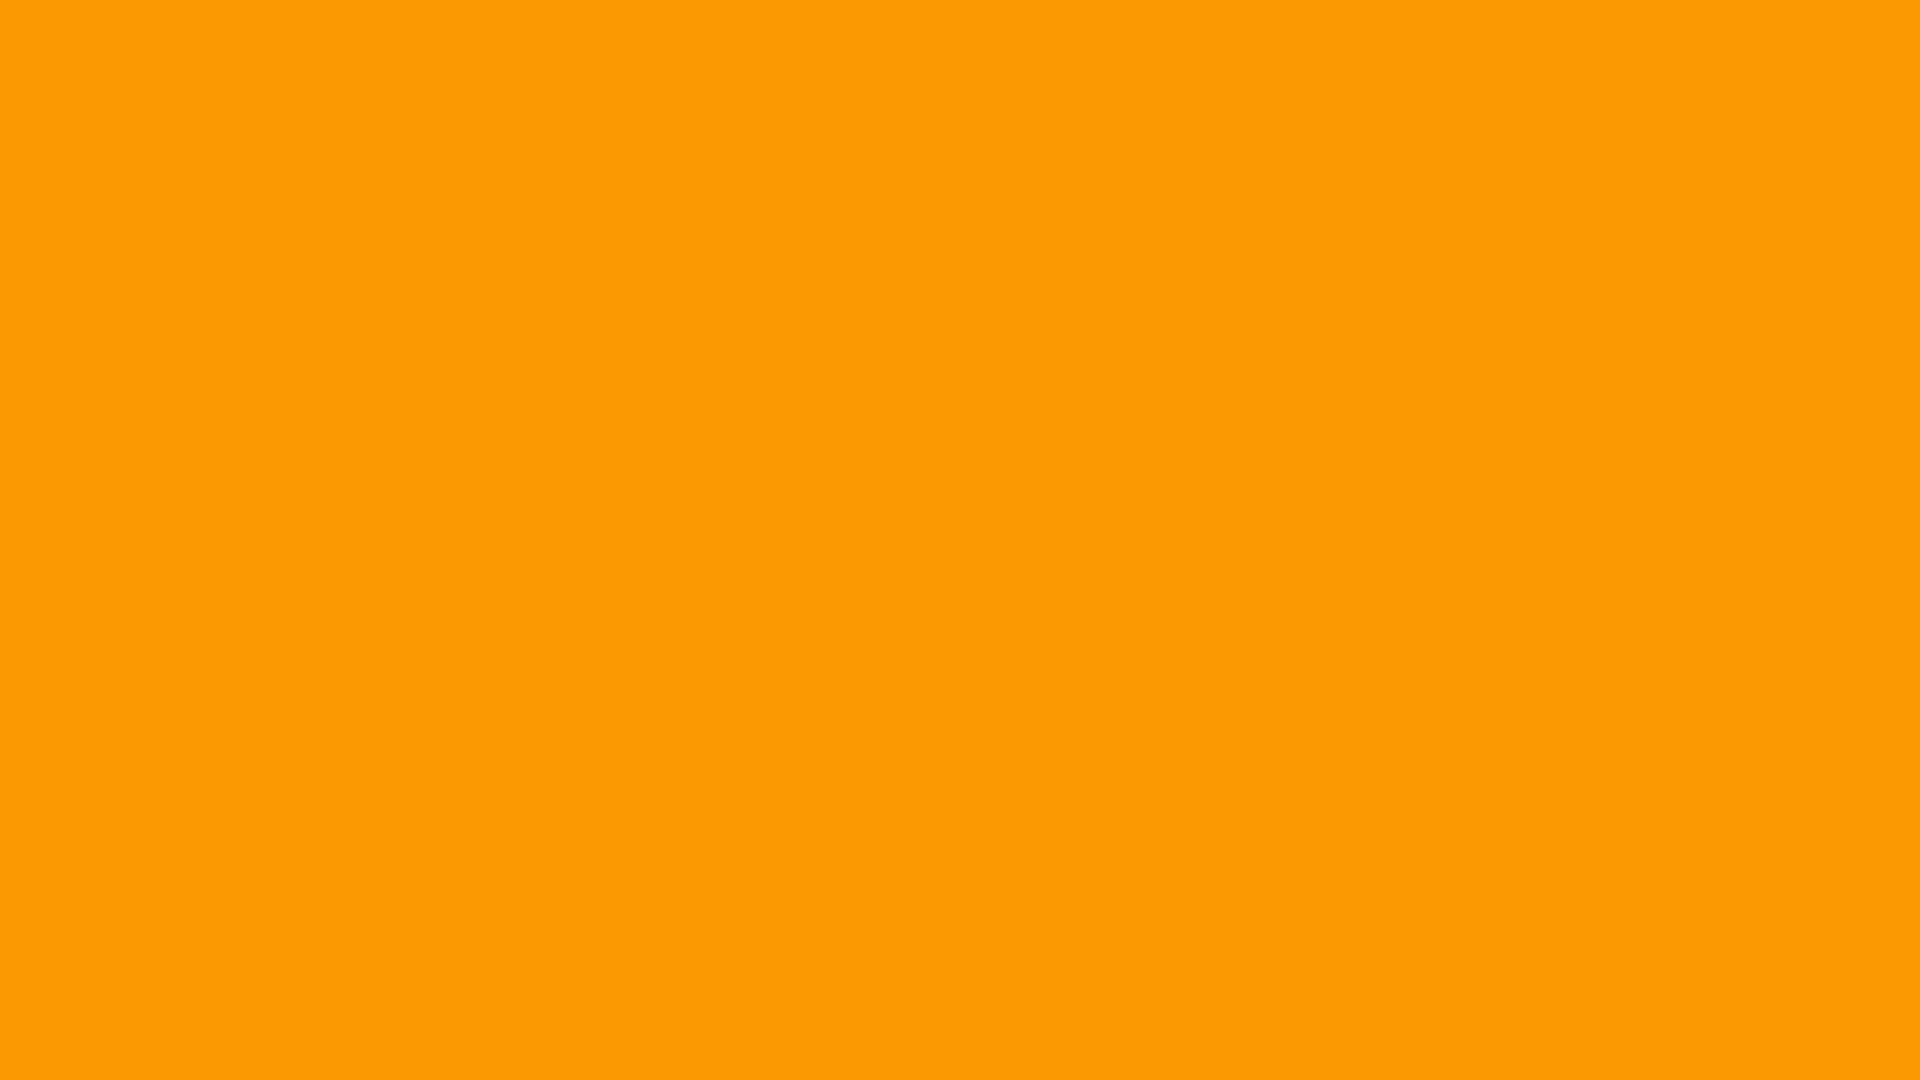 1920x1080 Orange RYB Solid Color Background